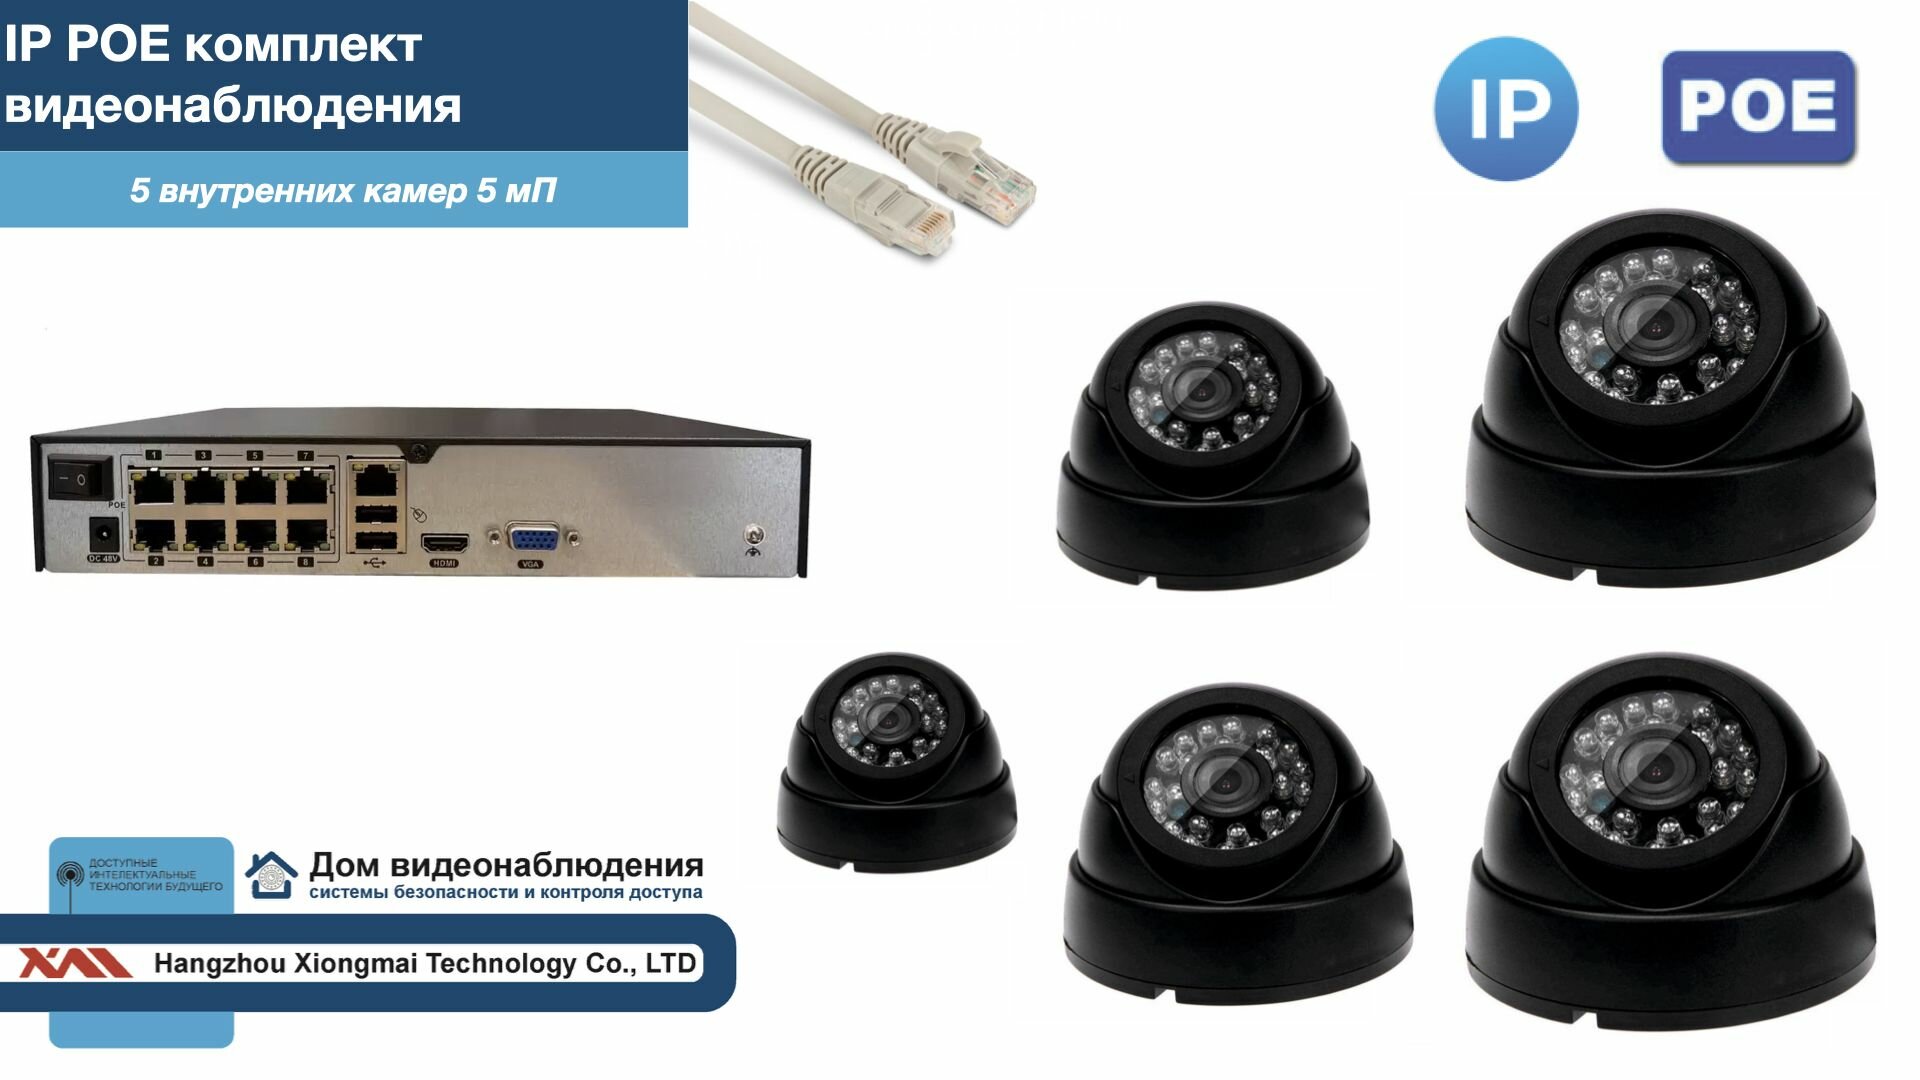 Полный IP POE комплект видеонаблюдения на 5 камер (KIT5IPPOE300B5MP-2)